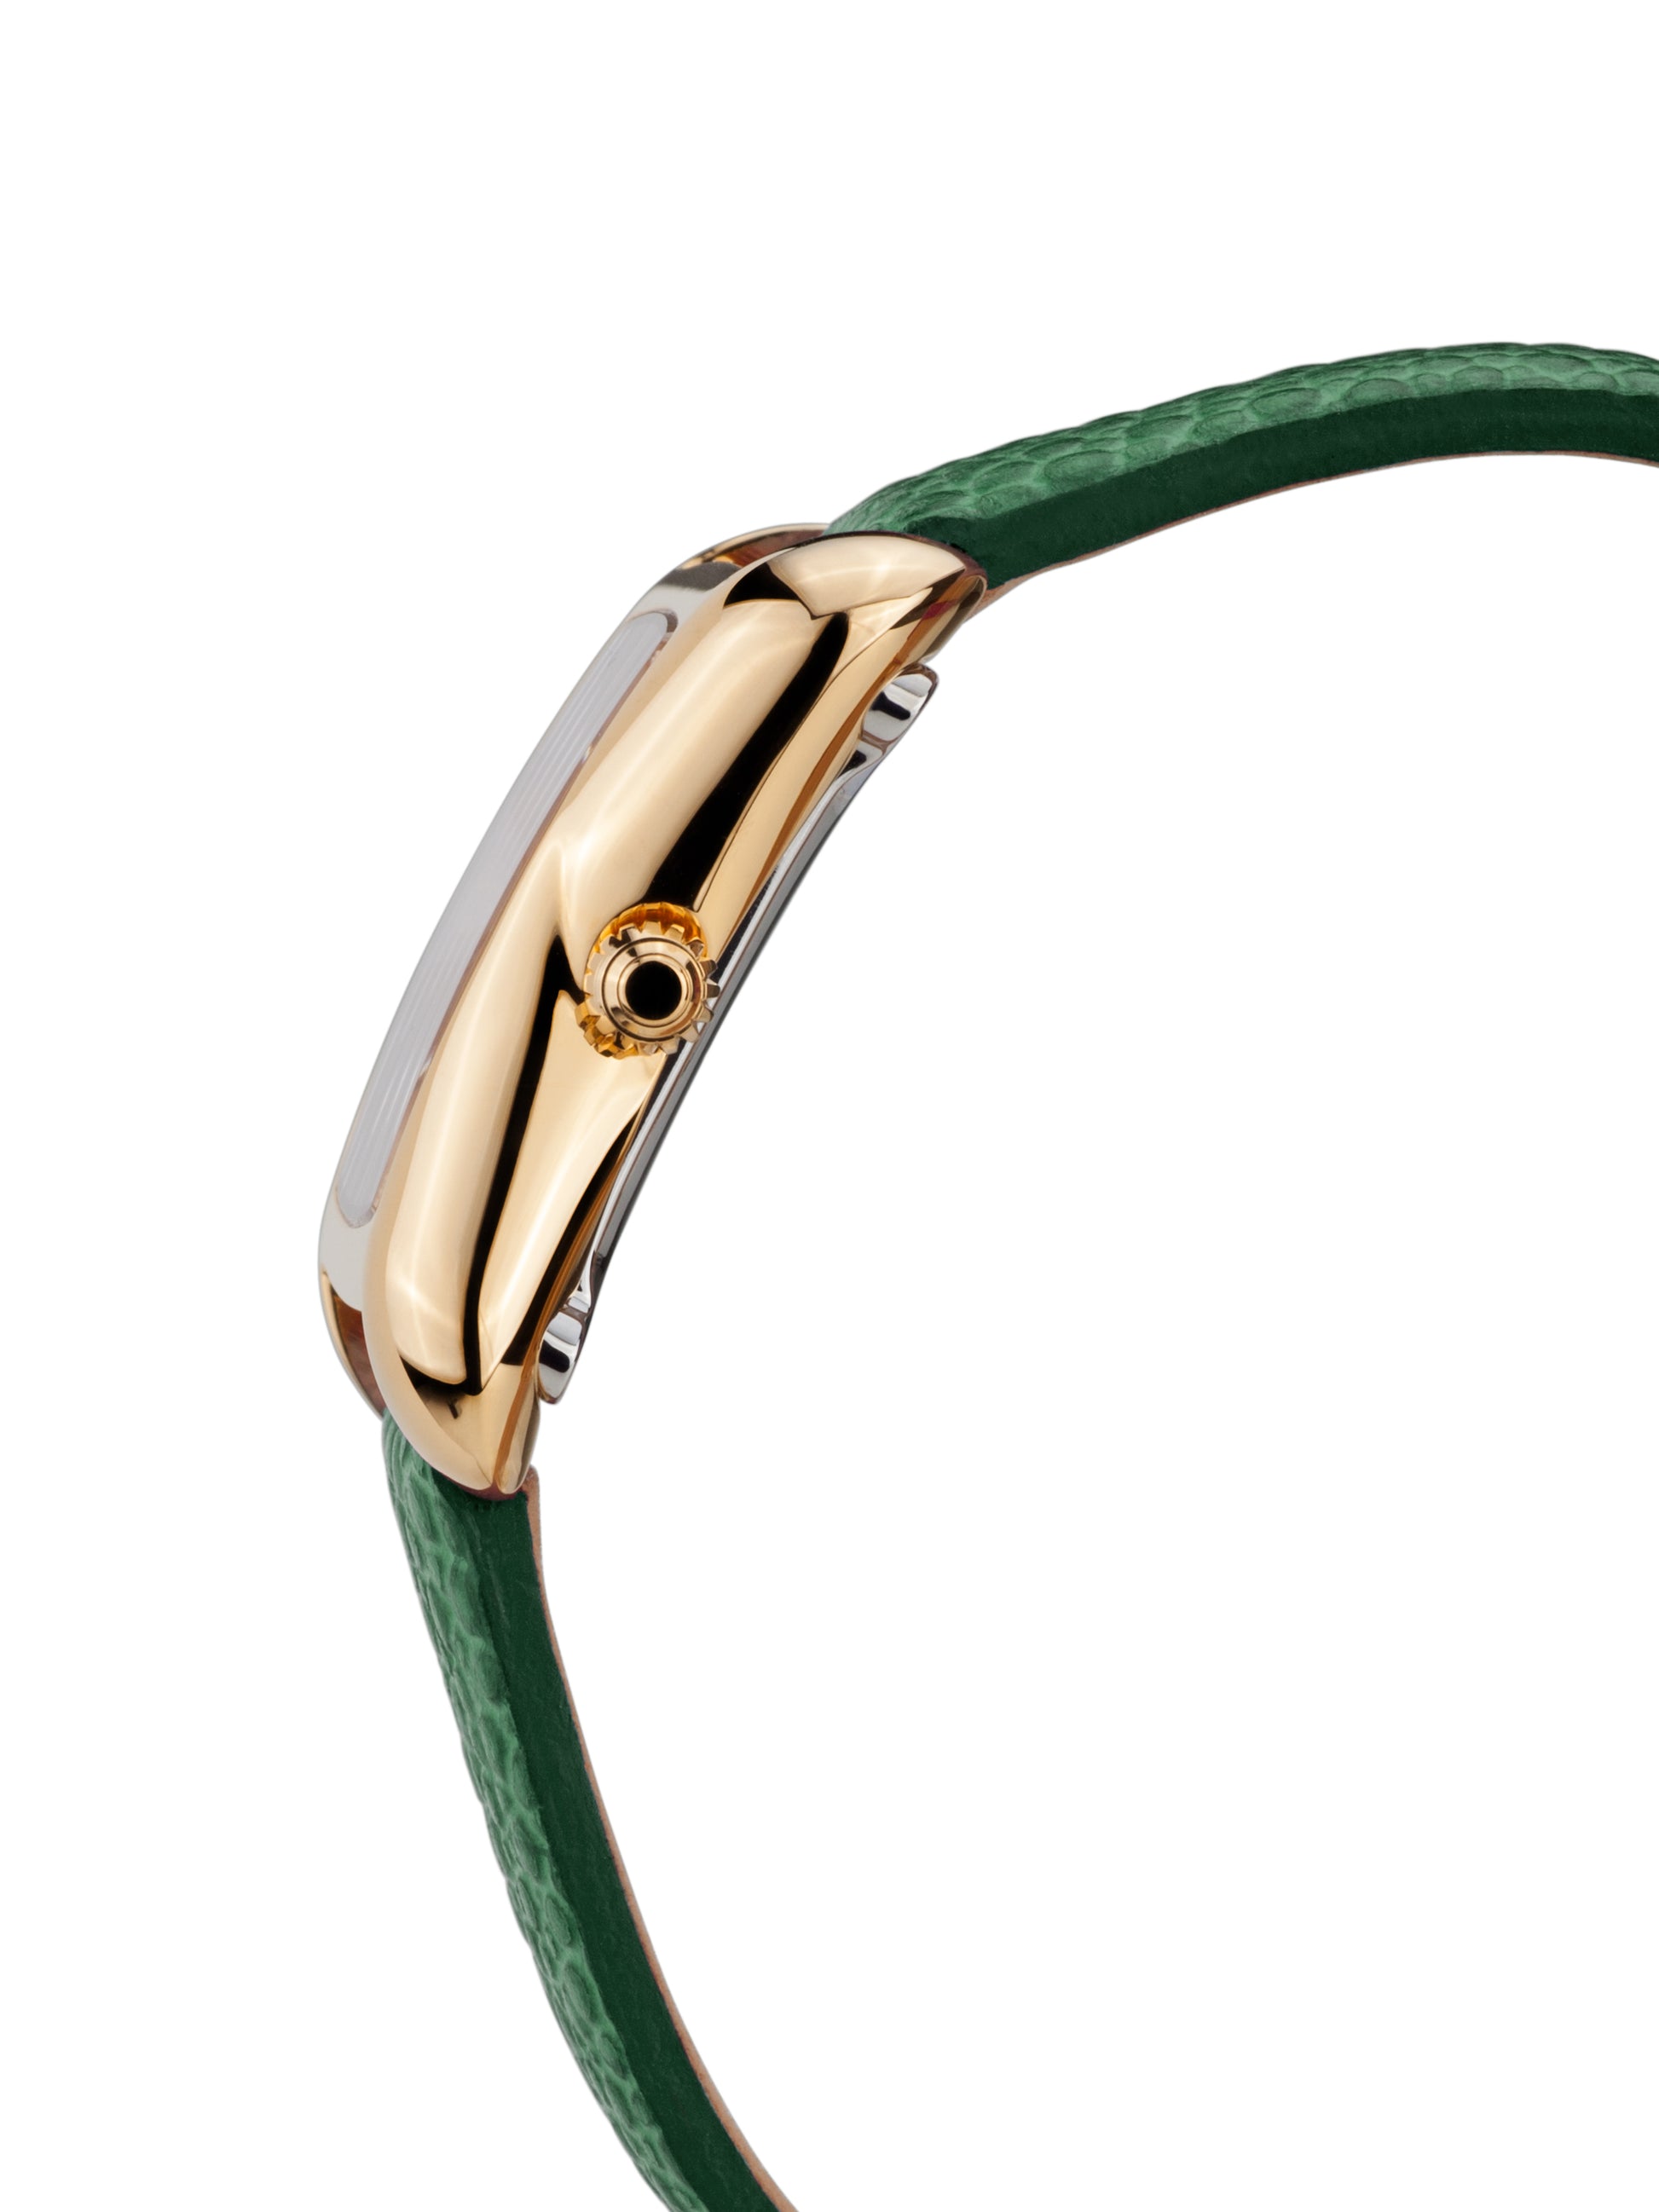 Automatic watches — Papillon — Mathieu Legrand — gold IP green